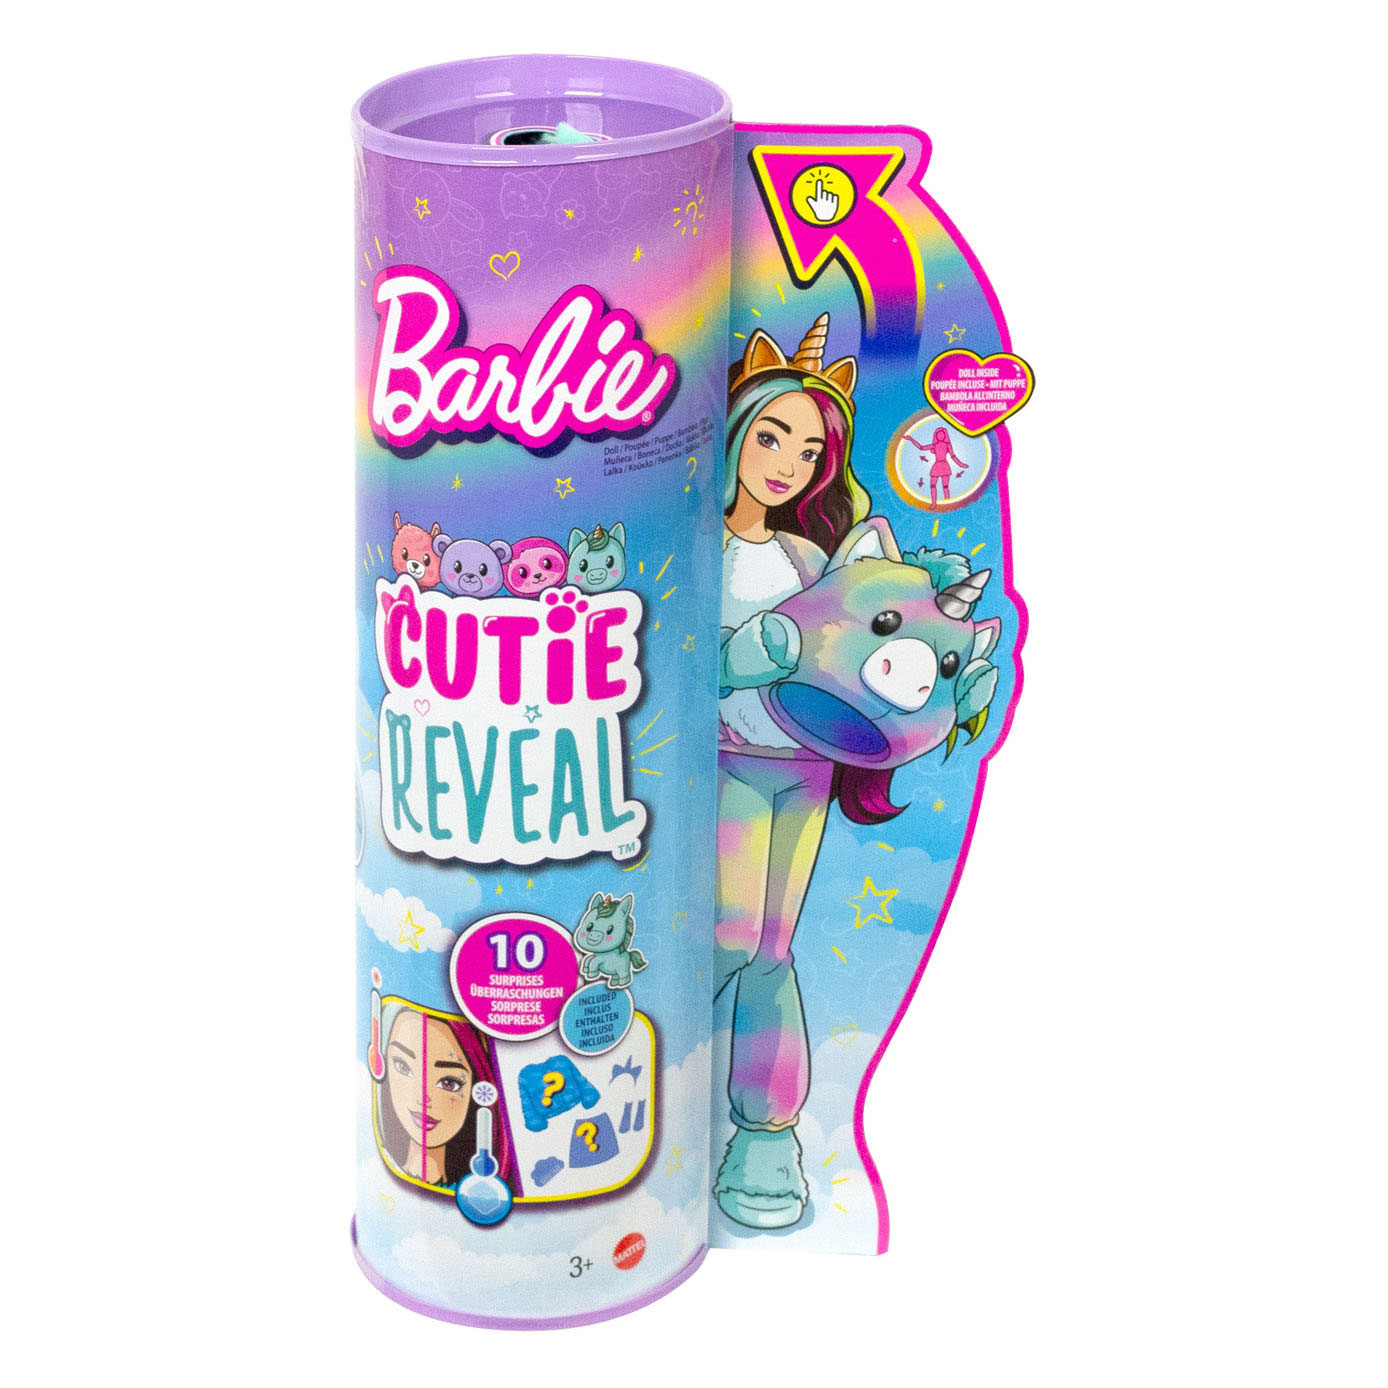 Barbie Cutie Reveal Puppe – Einhorn